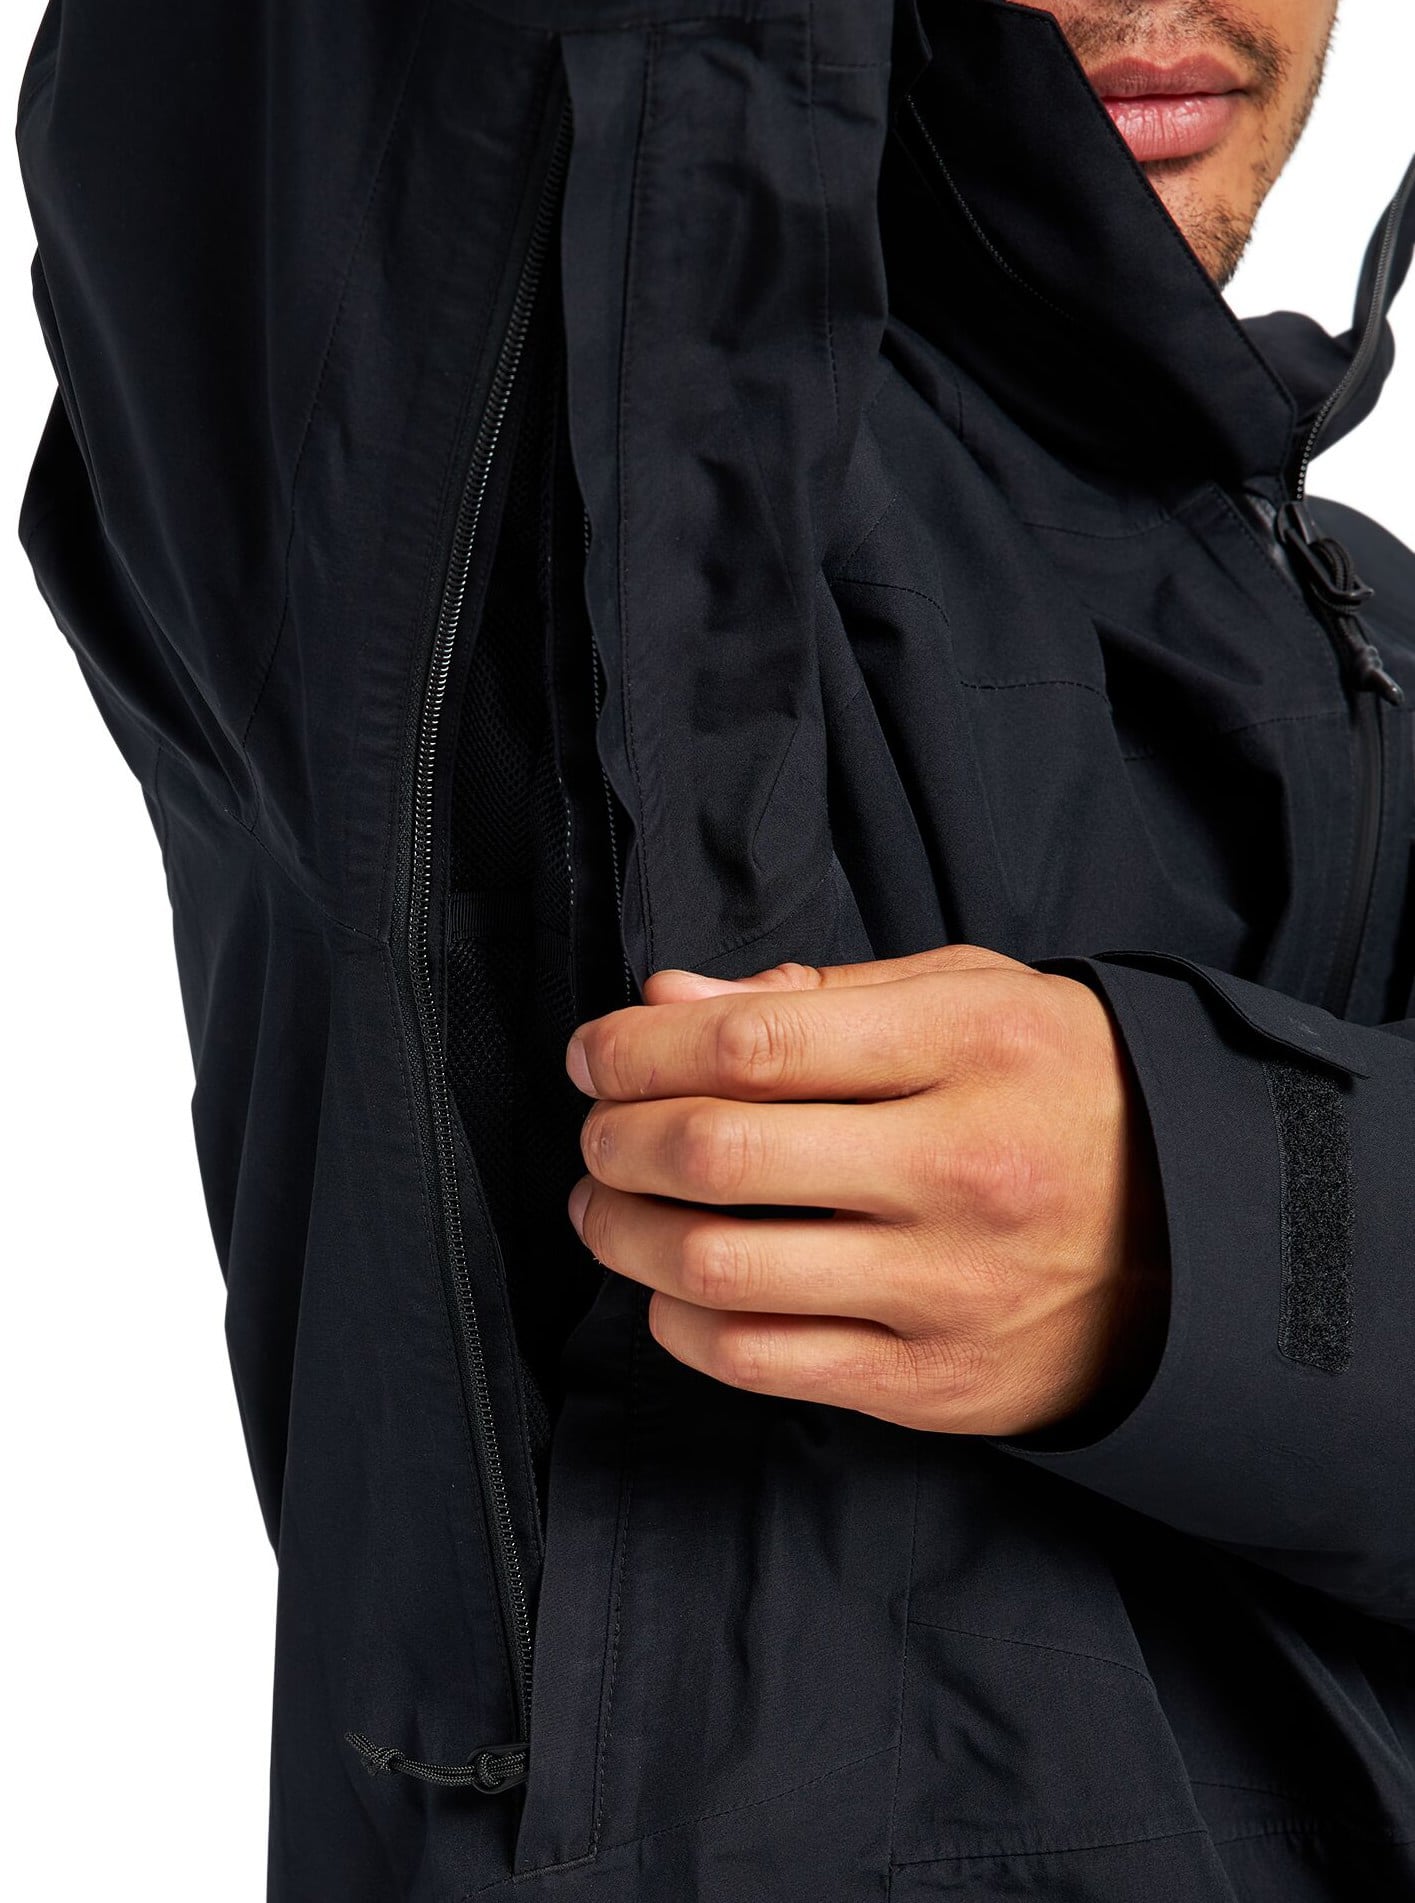 Burton Treeline GORE-TEX 3L Insulated Jacket - true black | Tactics